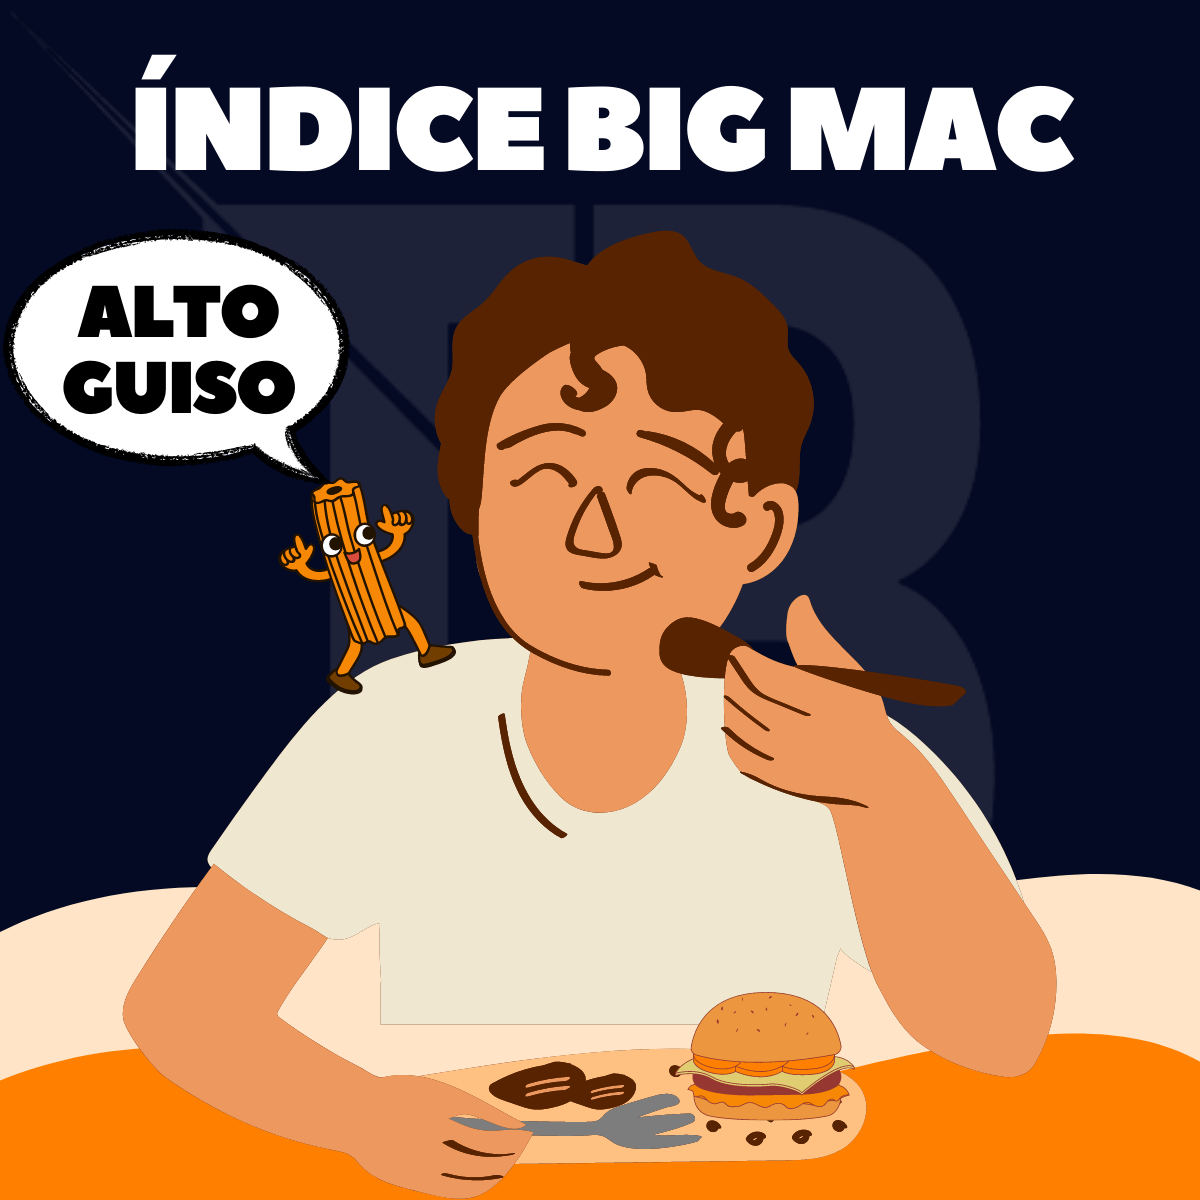 Índice Big Mac